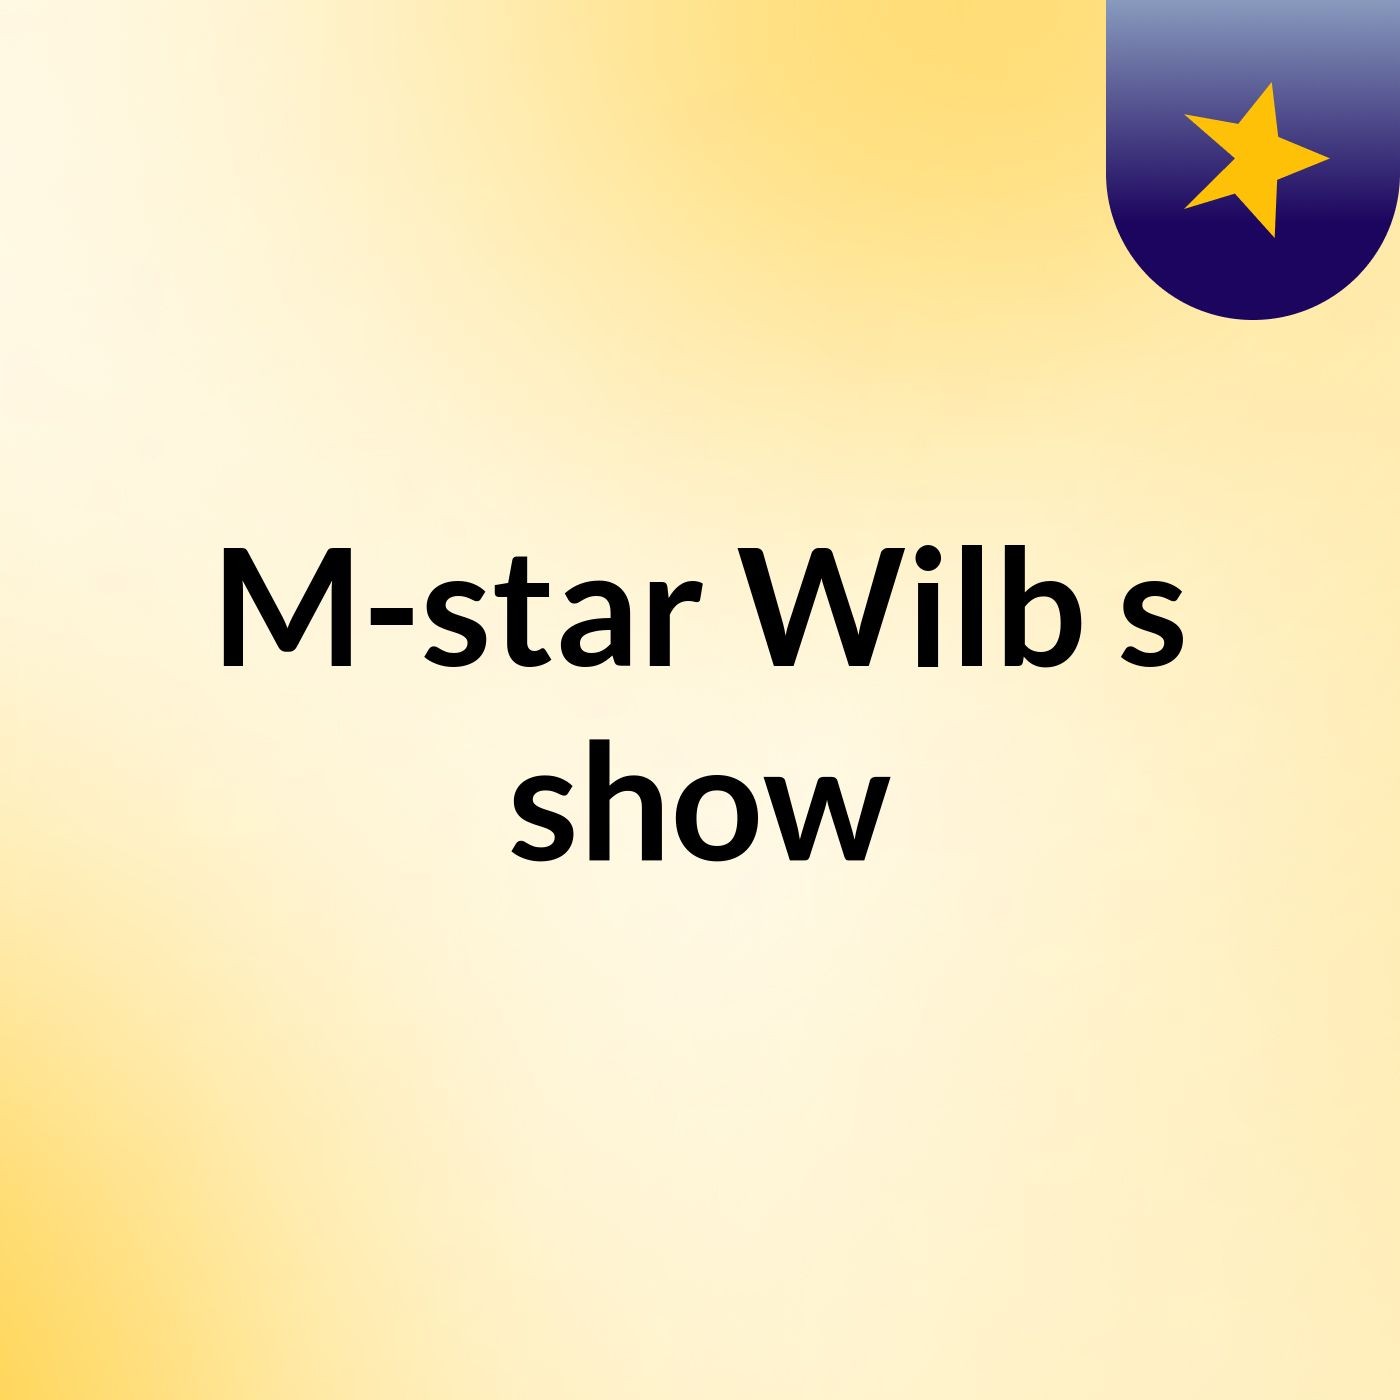 M-star Wilb's show